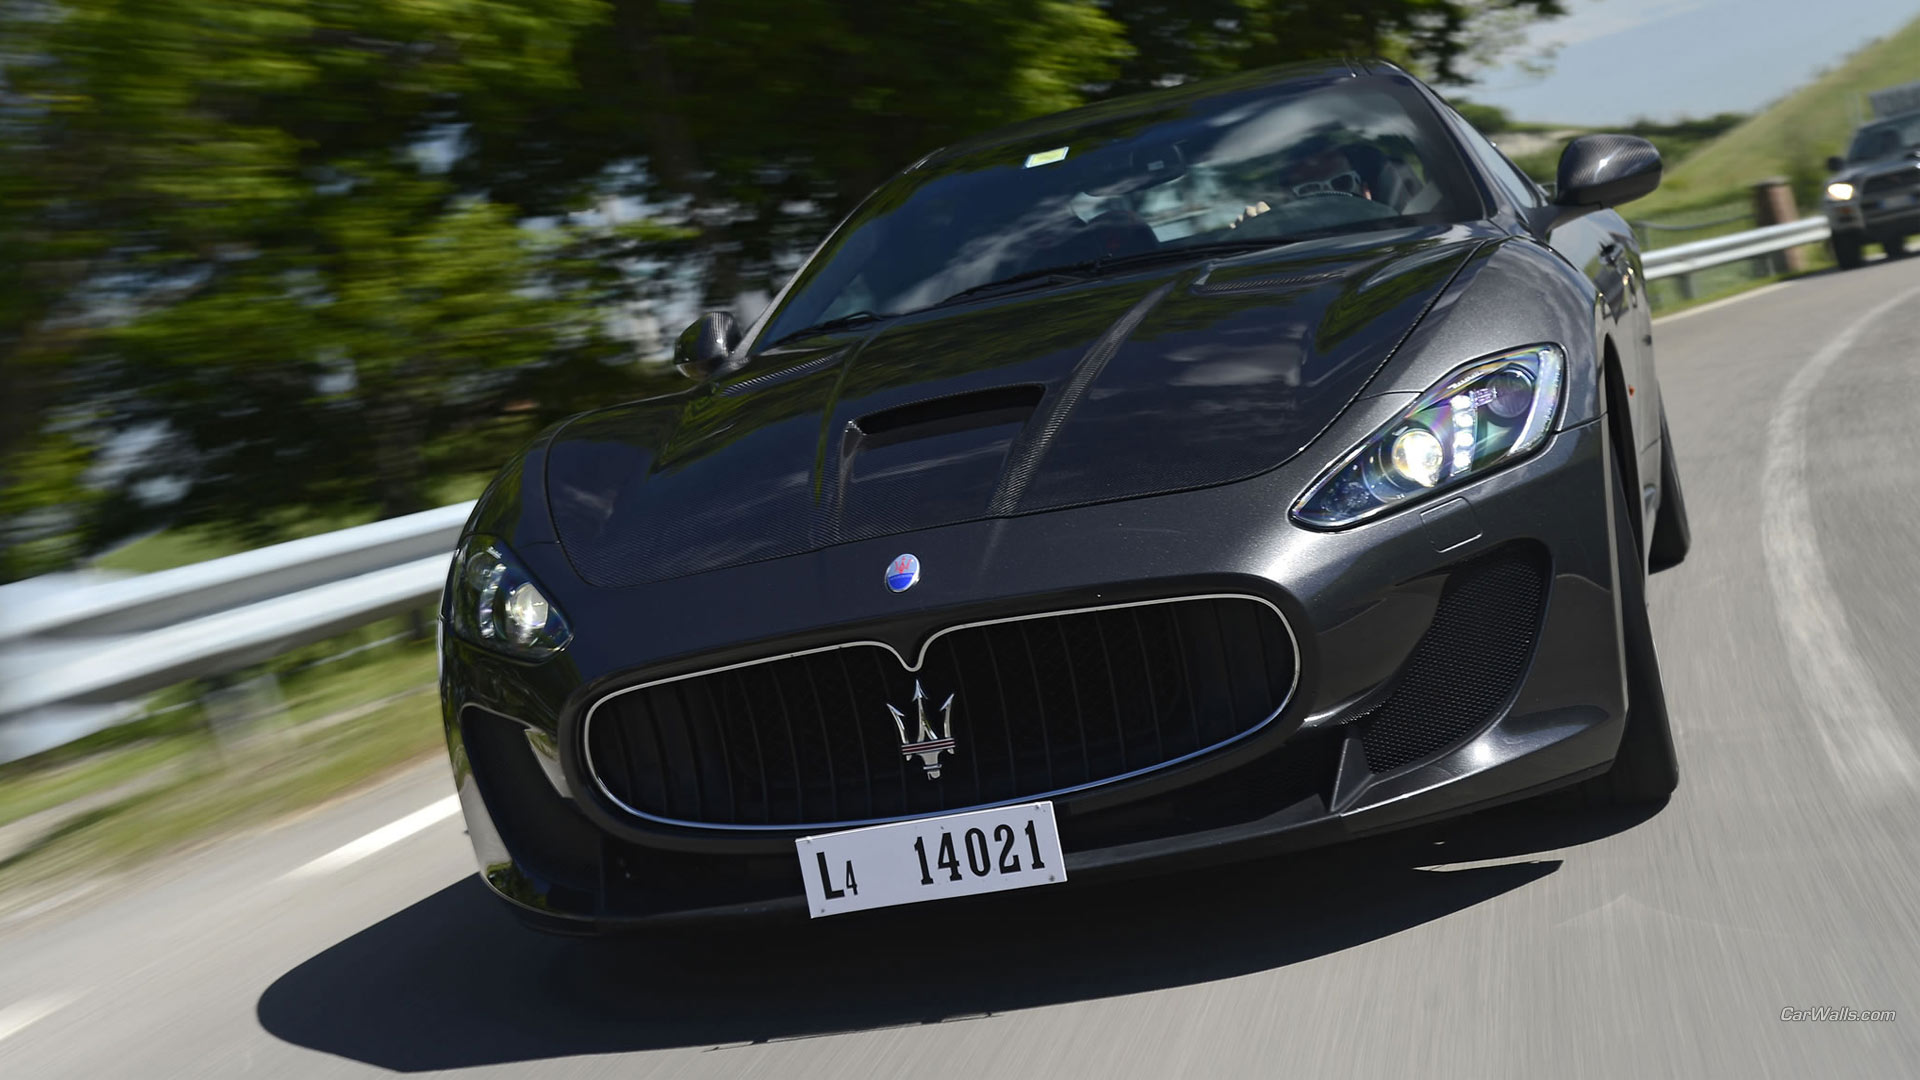 Vehicles 2014 Maserati GranTurismo MC Stradale HD Wallpaper | Background Image